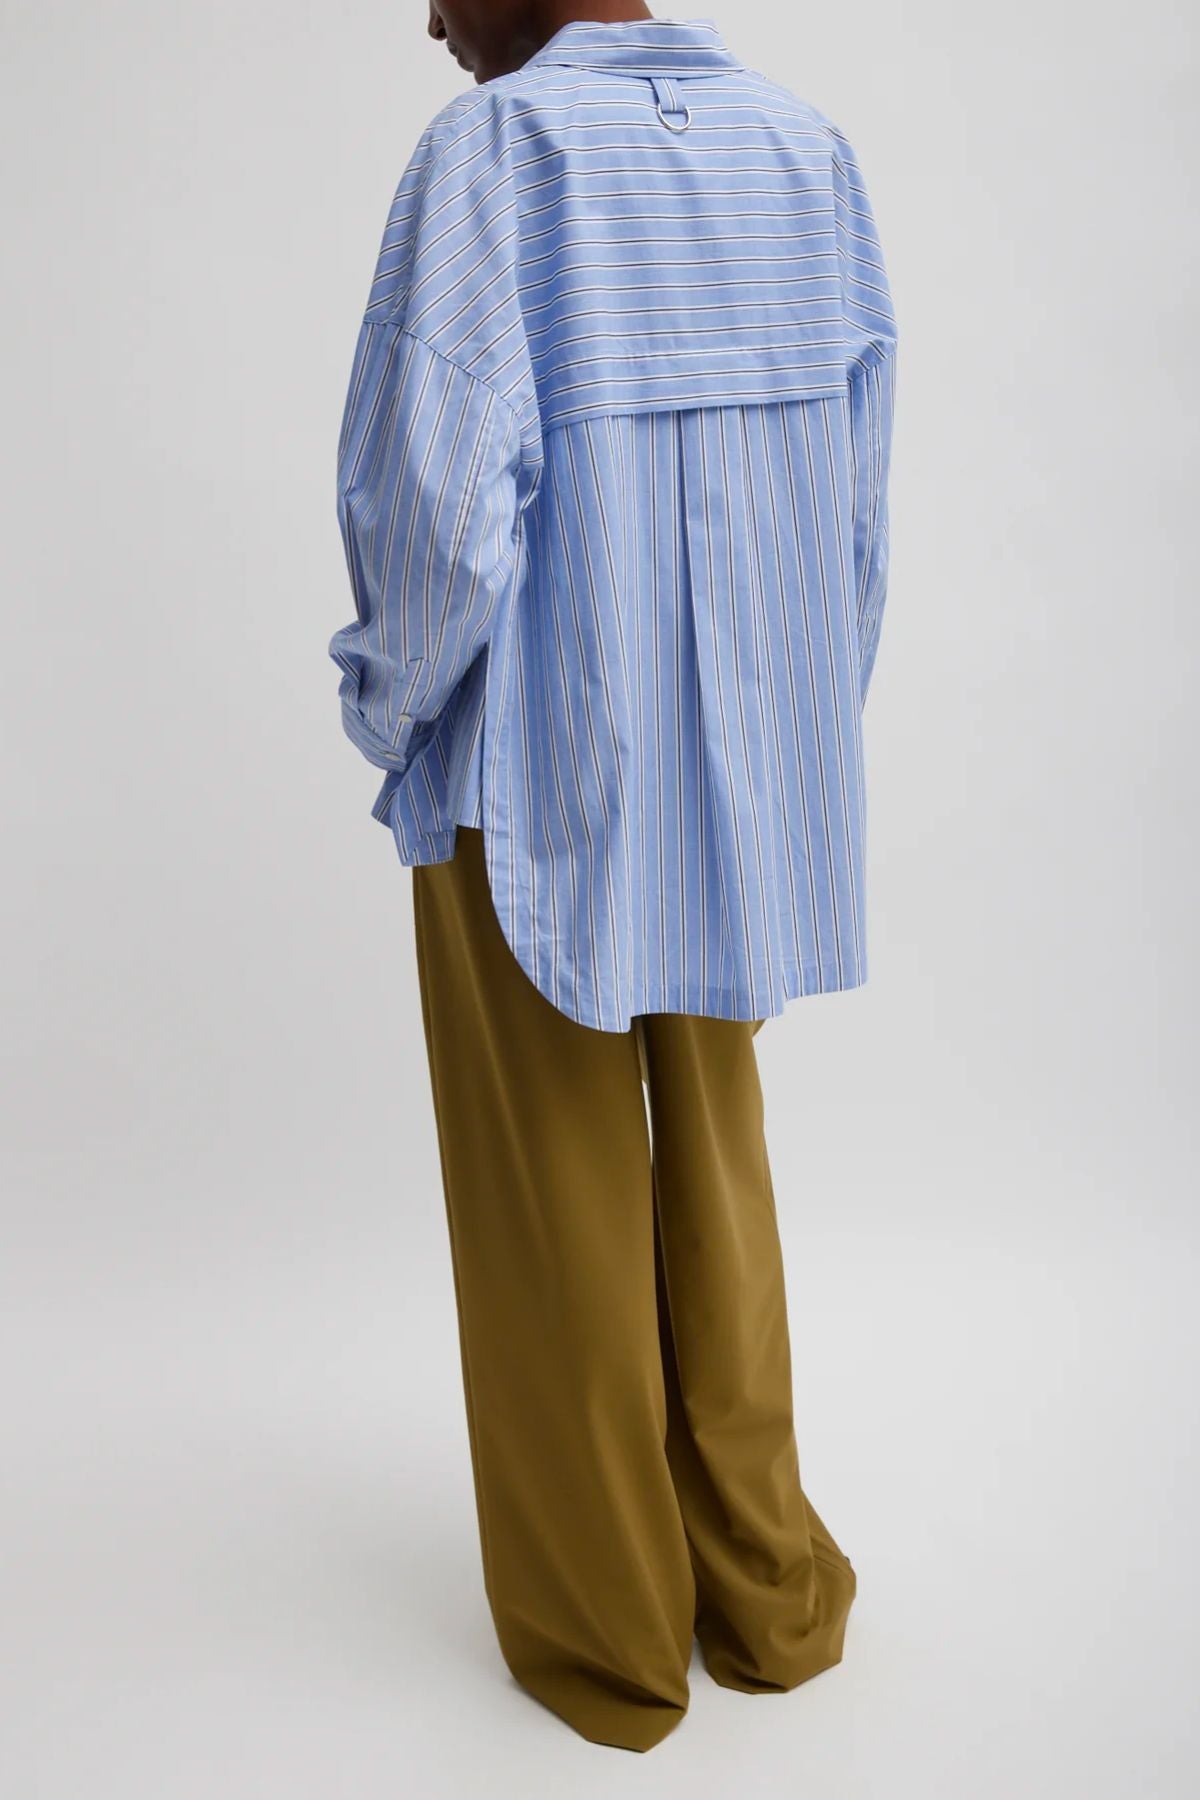 Tibi Gabe Oversized Striped Shirt - Blue Multi